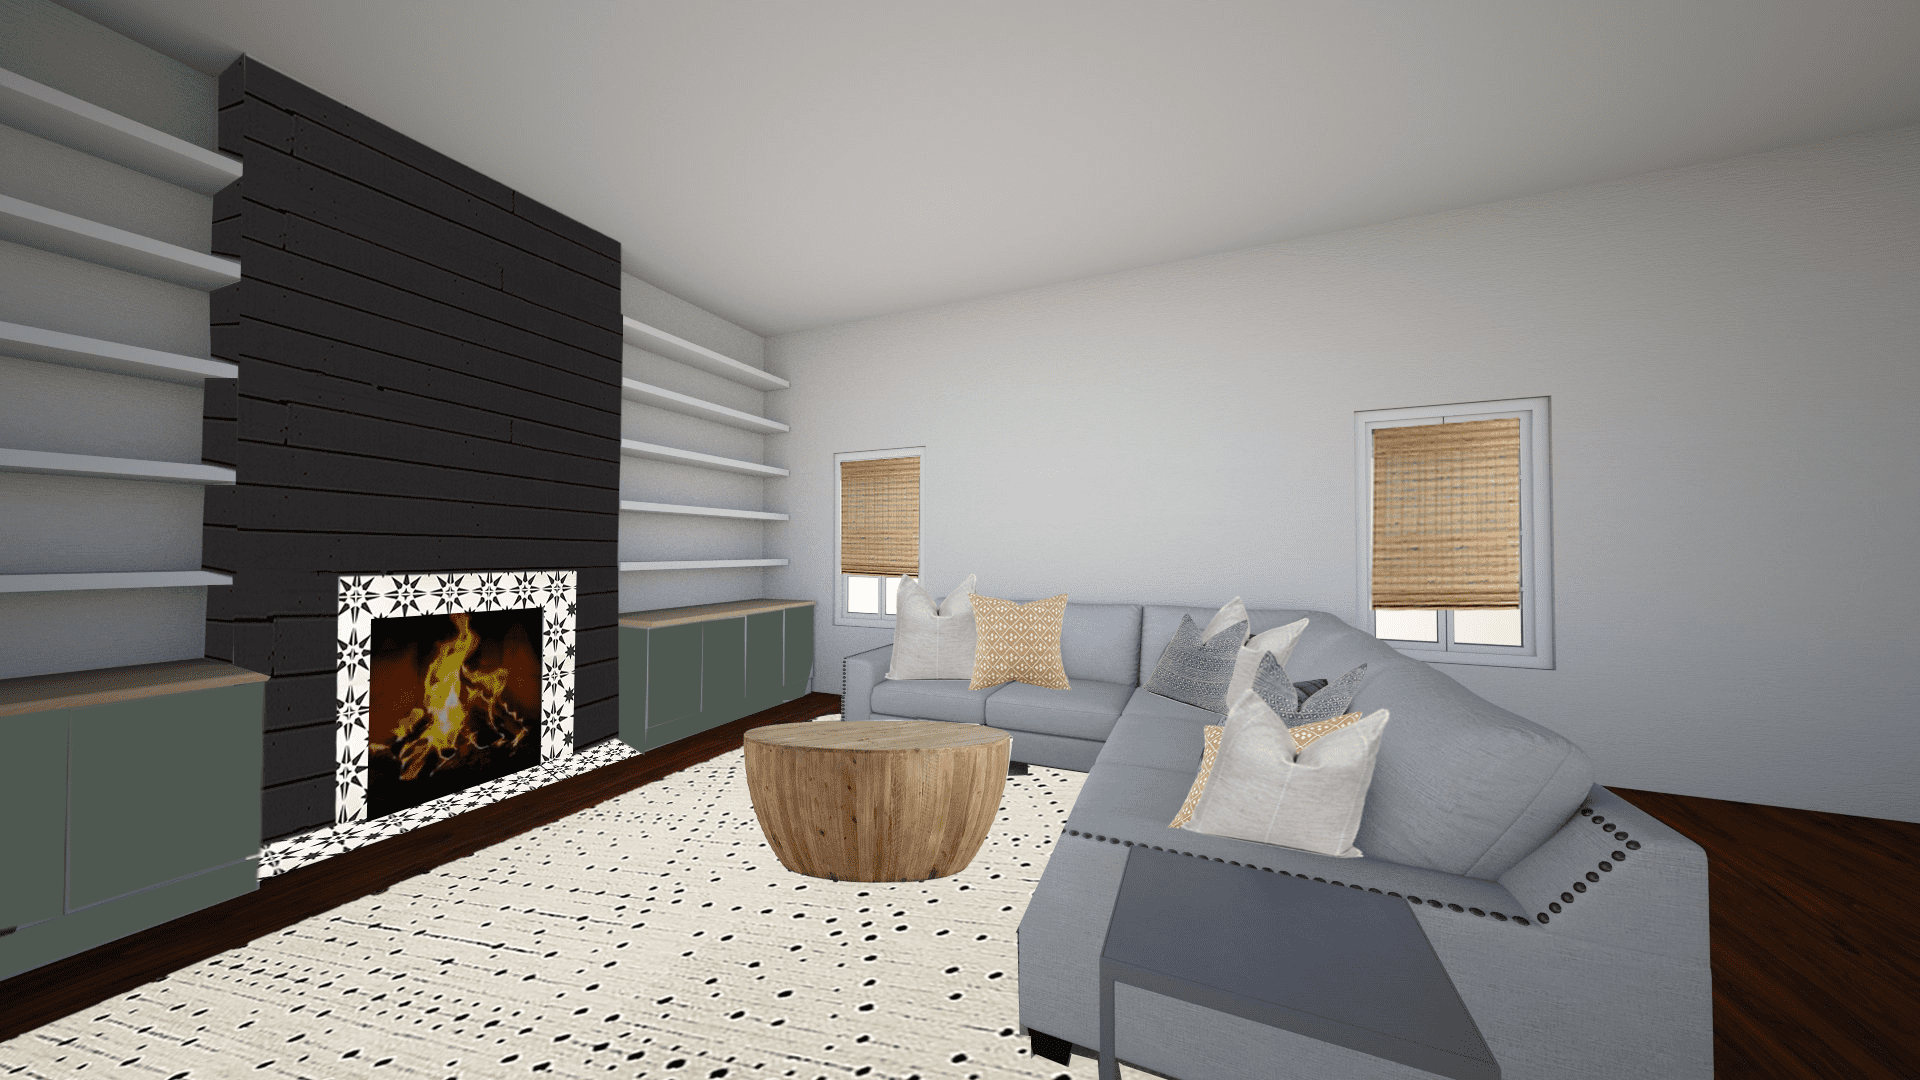 Living Room Design Plan: Mood Board & Floor Plan